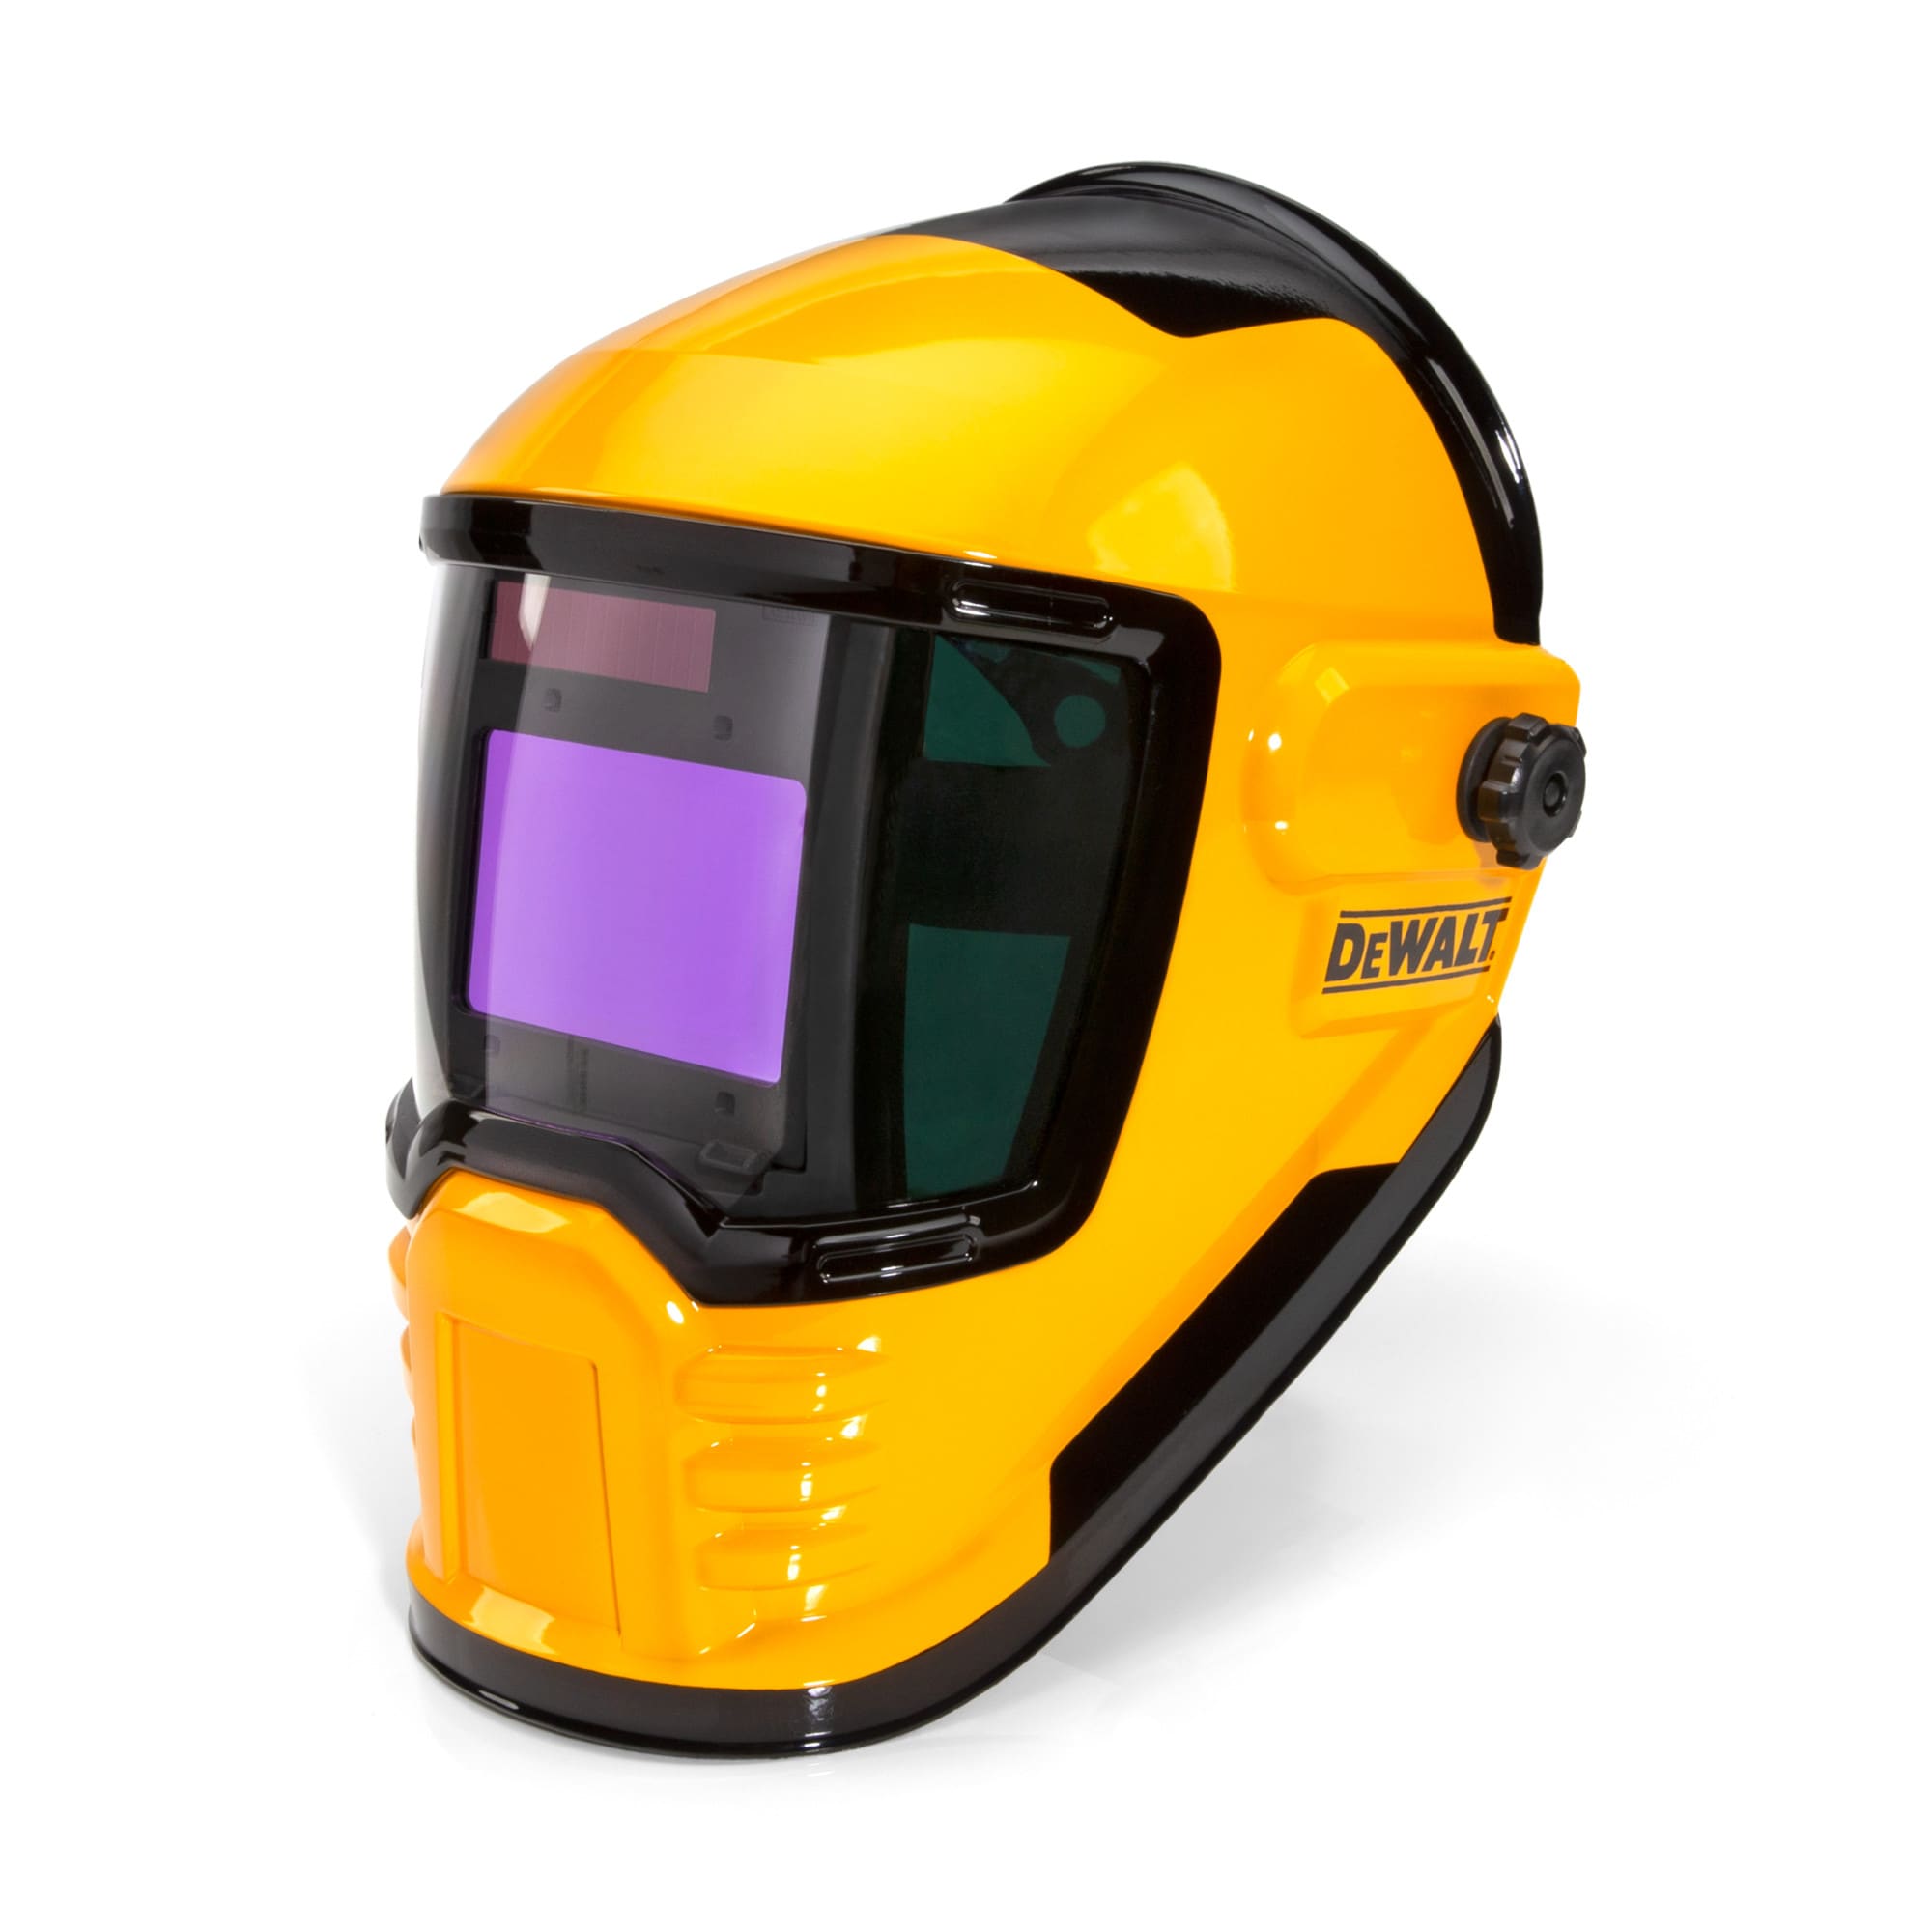 Auto Darkening Welding Helmet Solar Powered Lens Shade Control 9-13 Grind mode 